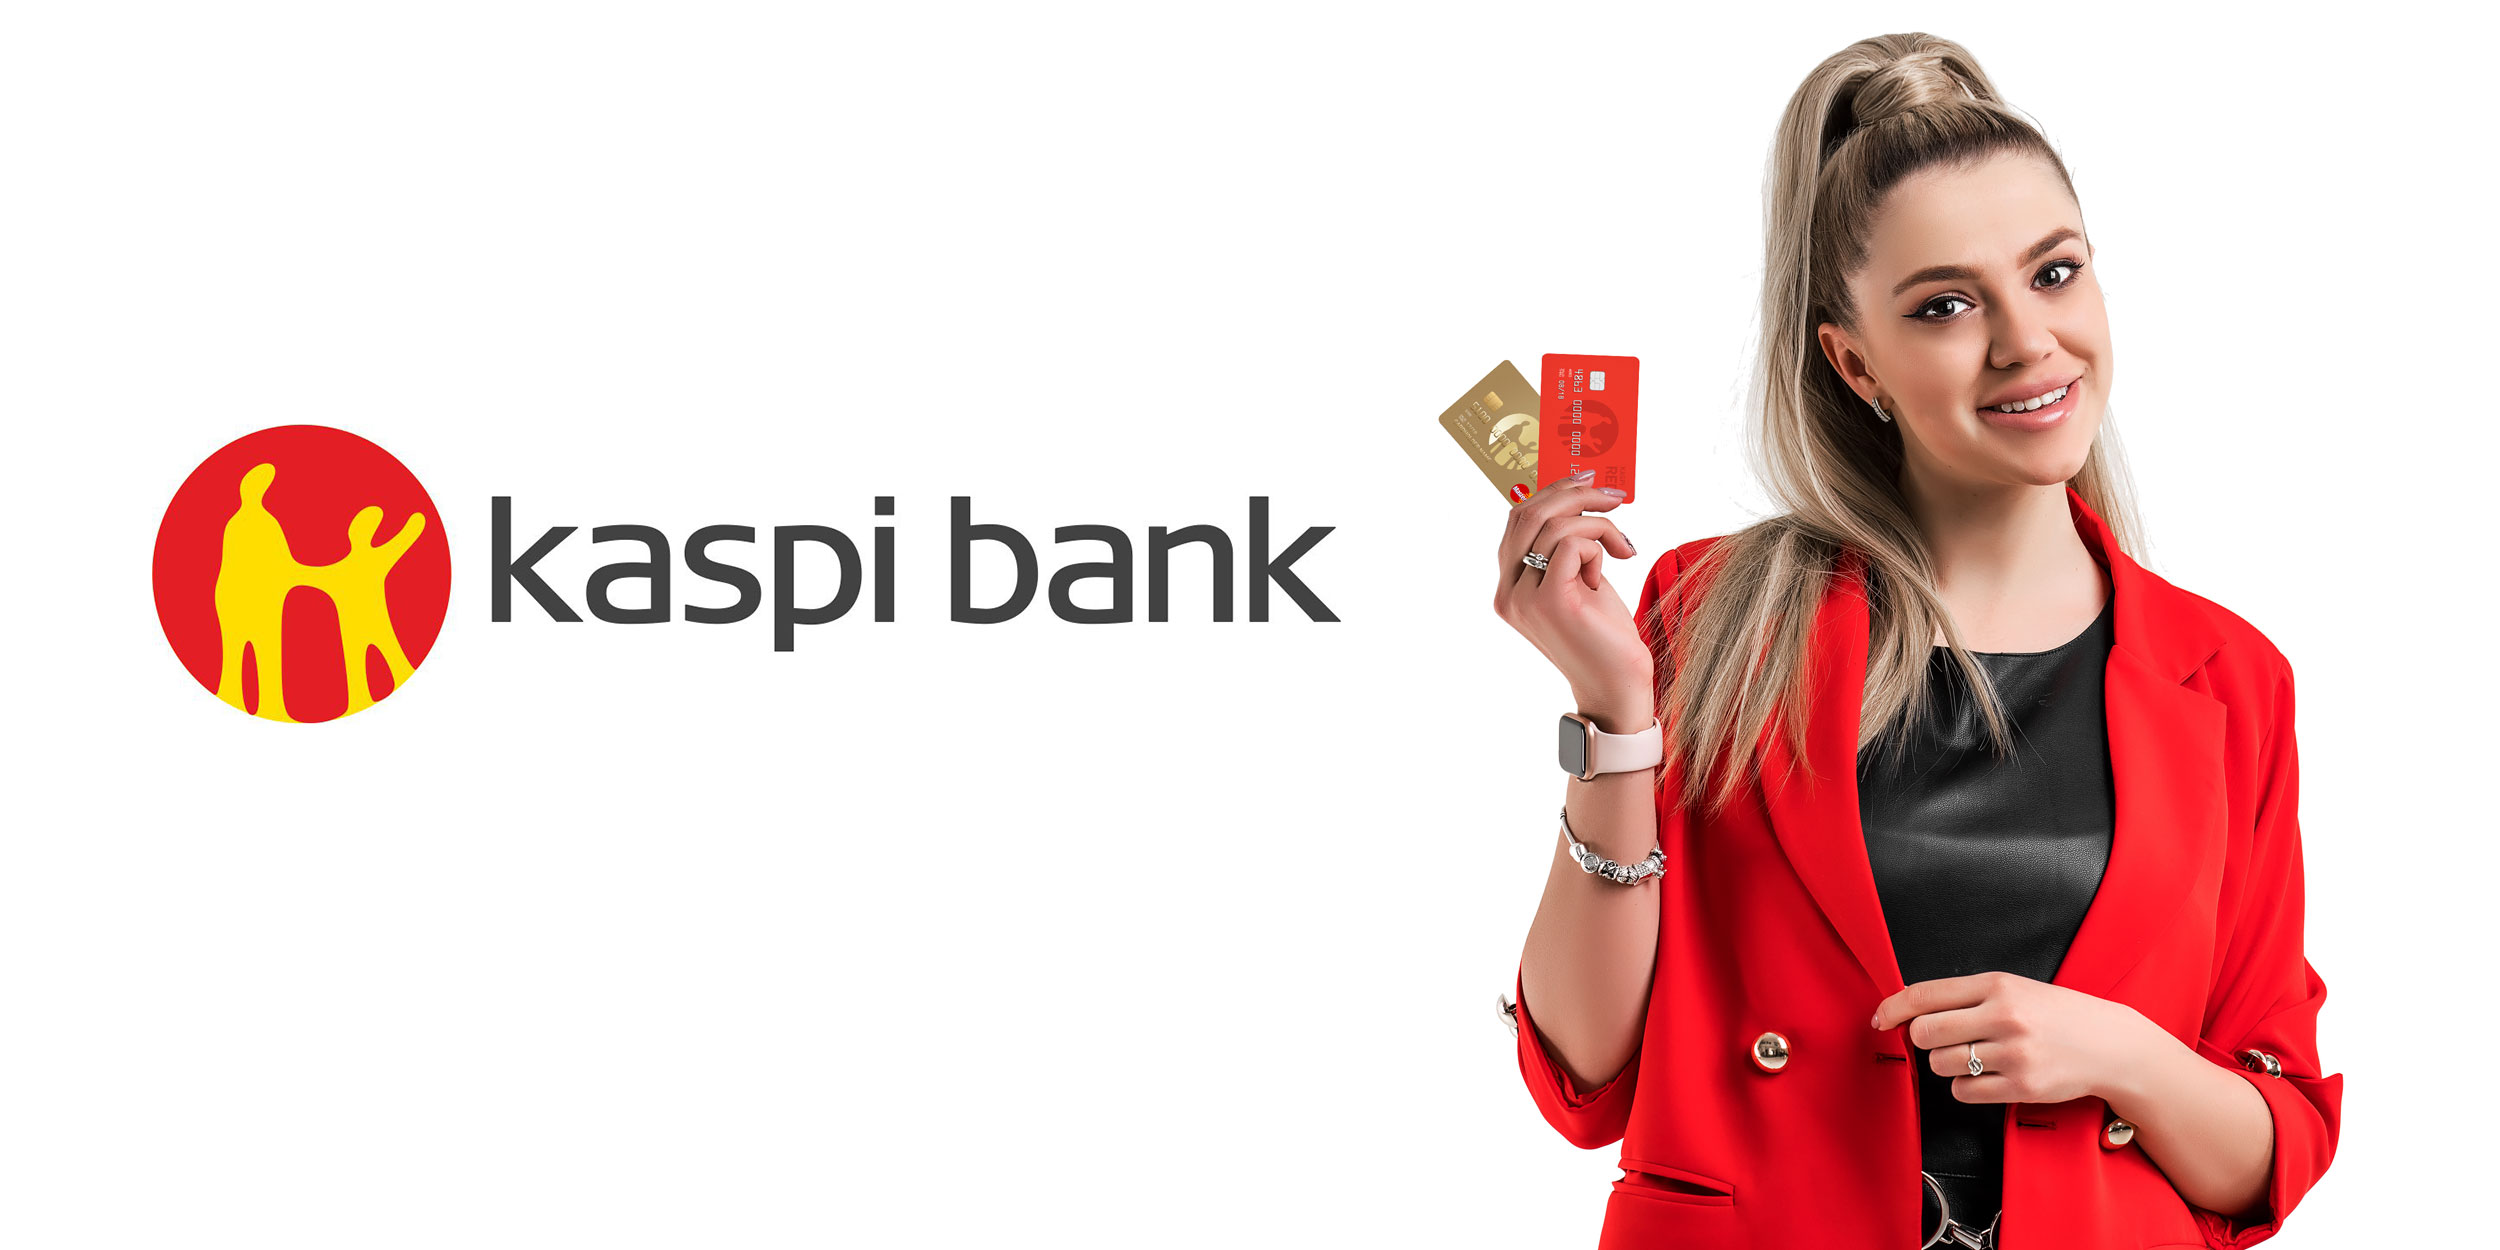 Kaspi c. Каспи банк. Kaspi Bank логотип. Каспи банк Казахстан. Каспи банк фото.